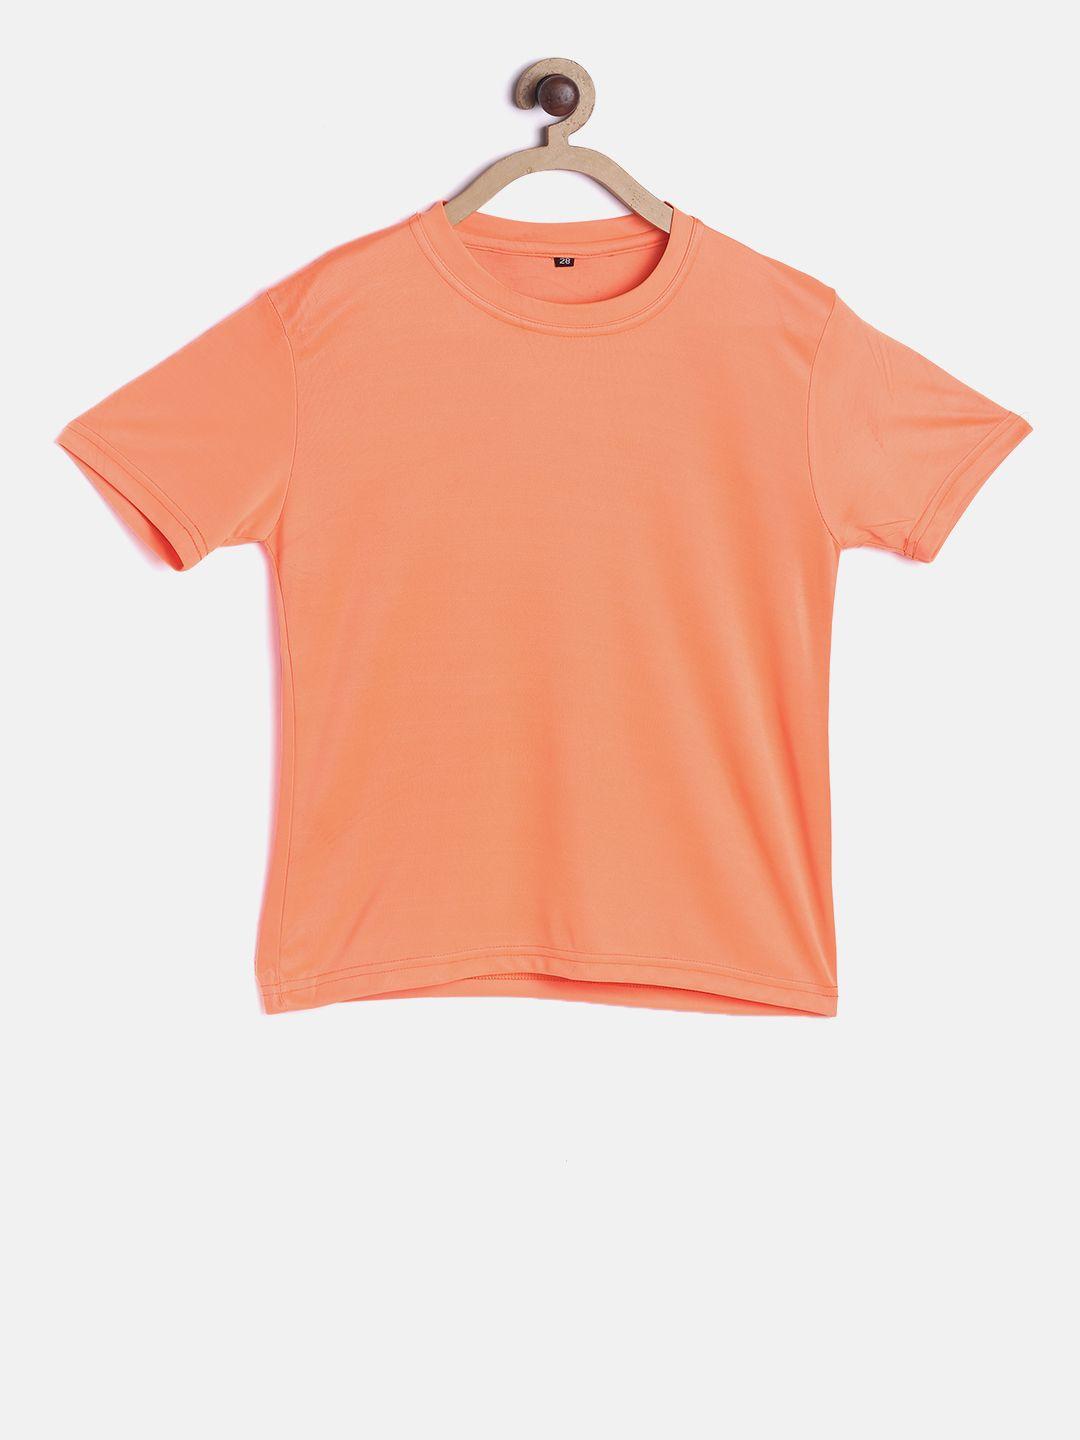 tiny hug boys coral orange solid round neck t-shirt